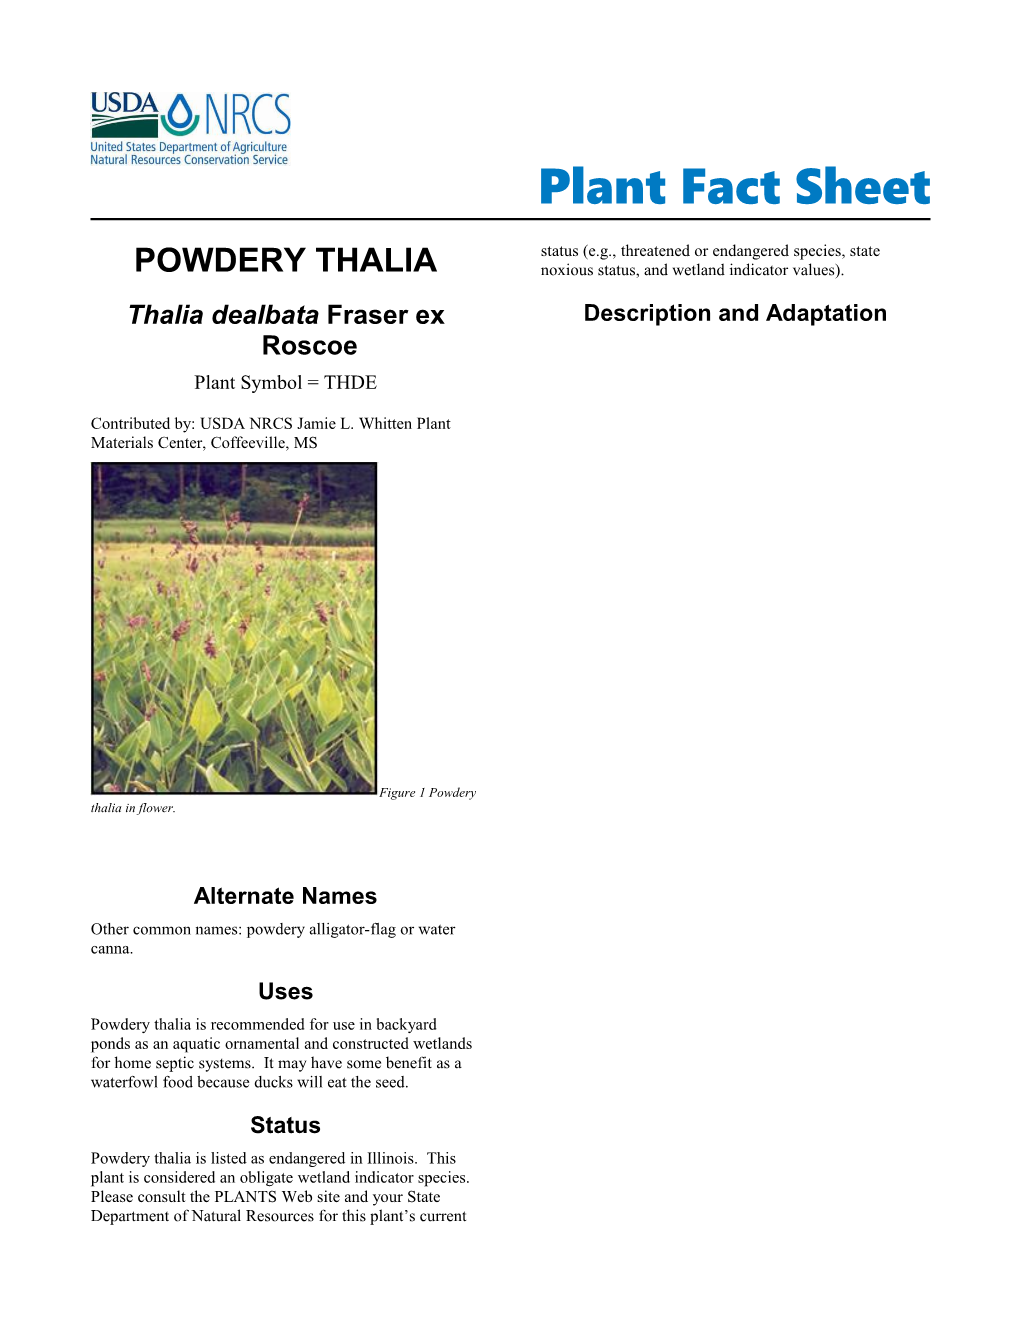 Powdery Thalia (Thalia Dealbata) Plant Fact Sheet Template